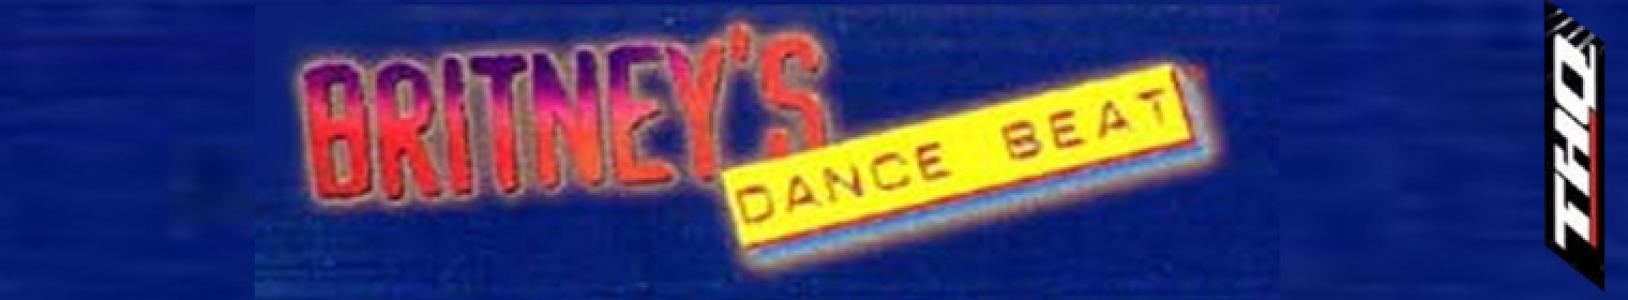 Britney's Dance Beat banner